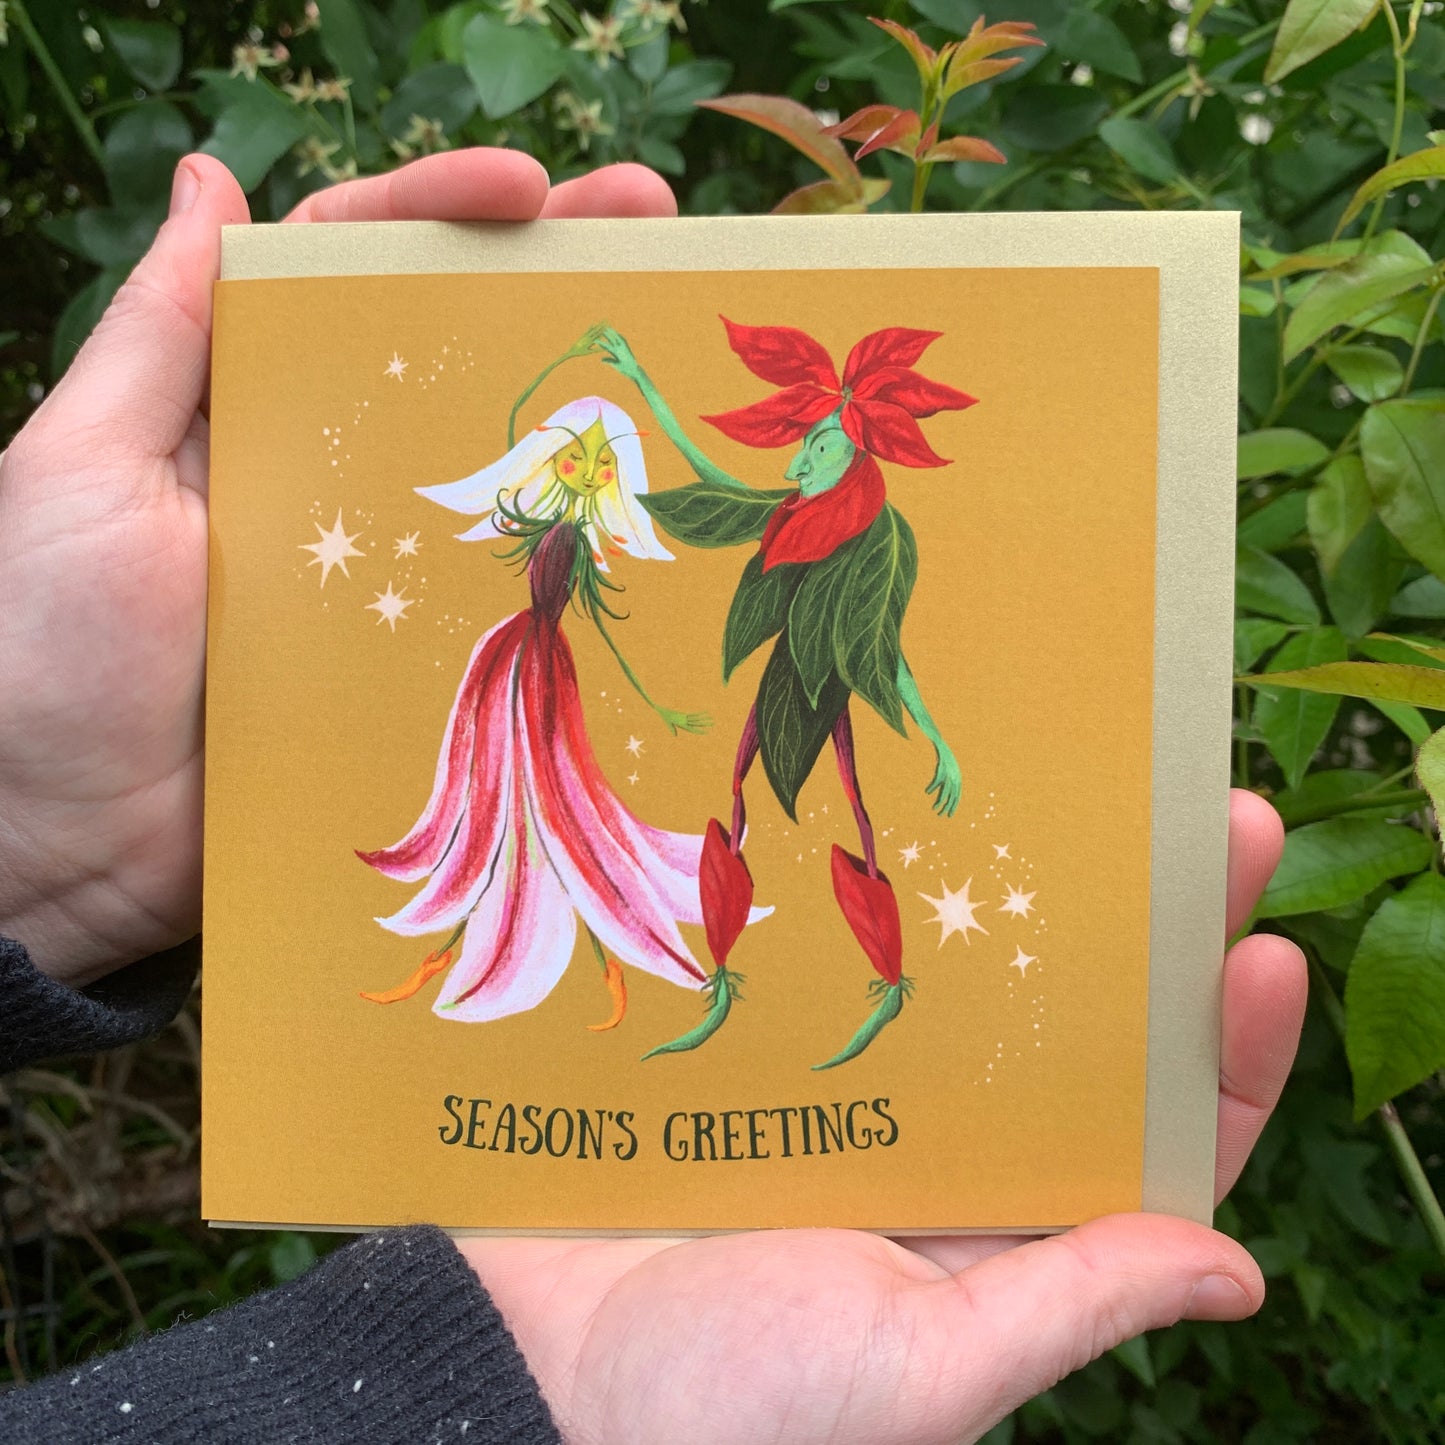 Anna Seed Art | Illustrated Christmas Card! "Season's Greetings" - Blank square seasonal greeting card